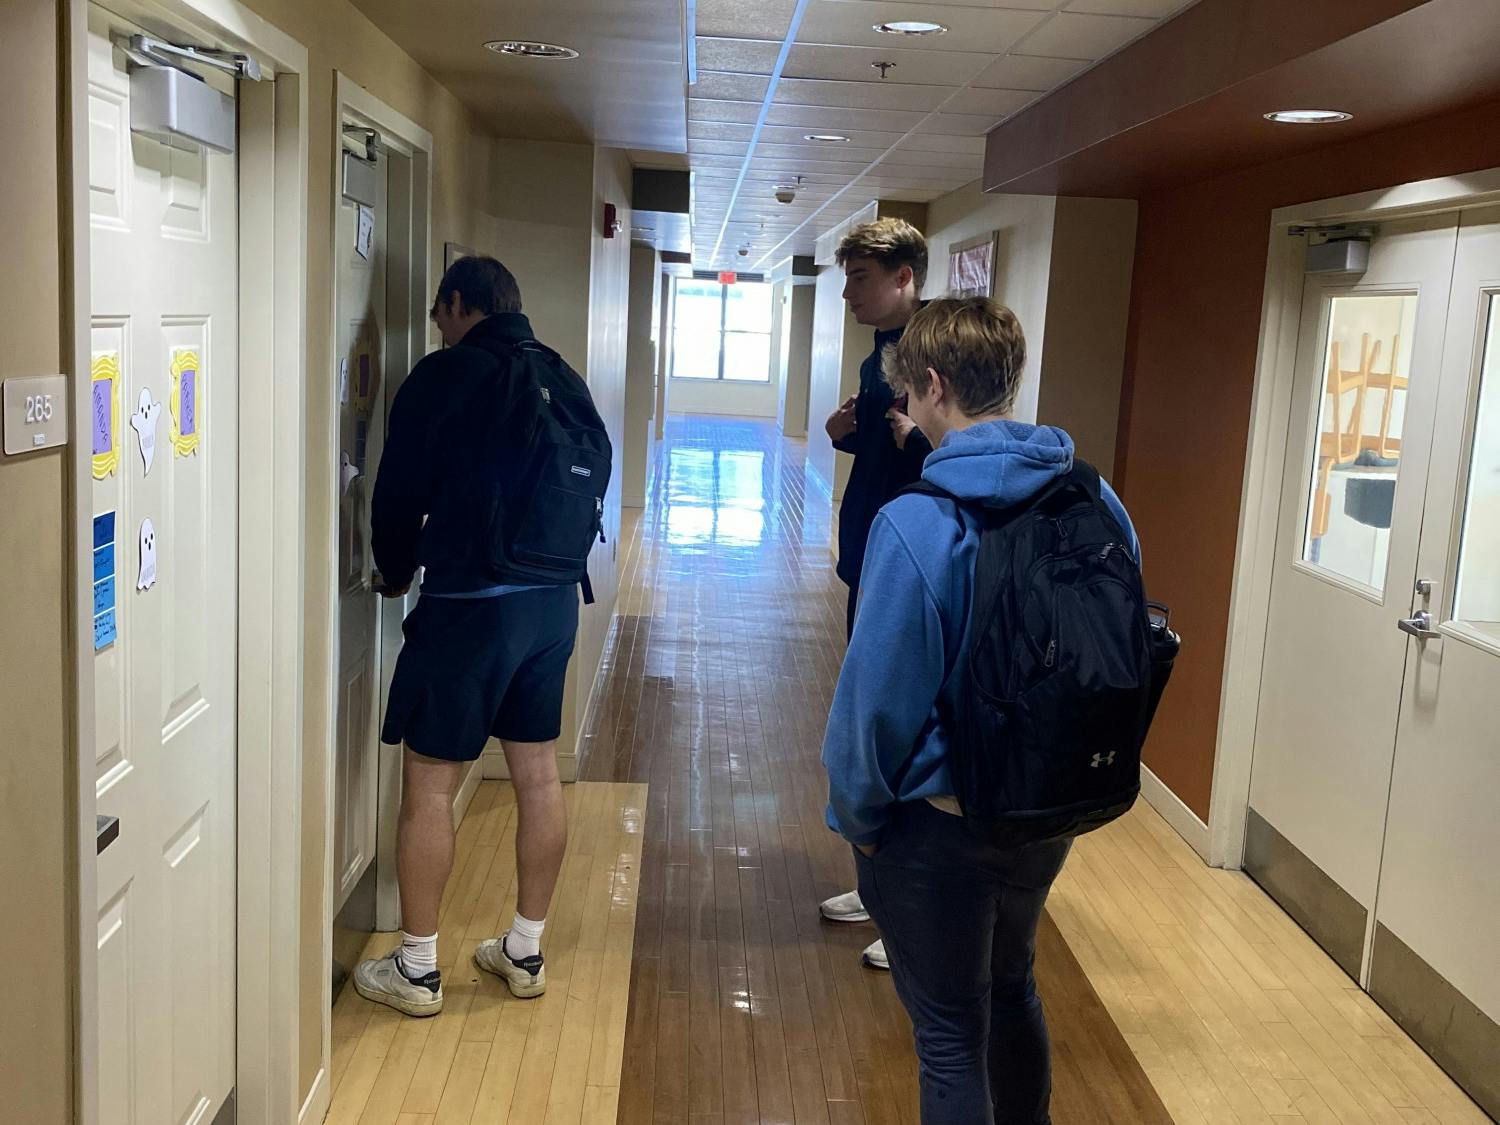 Sophomores Mark Wischmeyr, Luke Crockett and Tord Heskestad enter their room at 25 W. Home St.